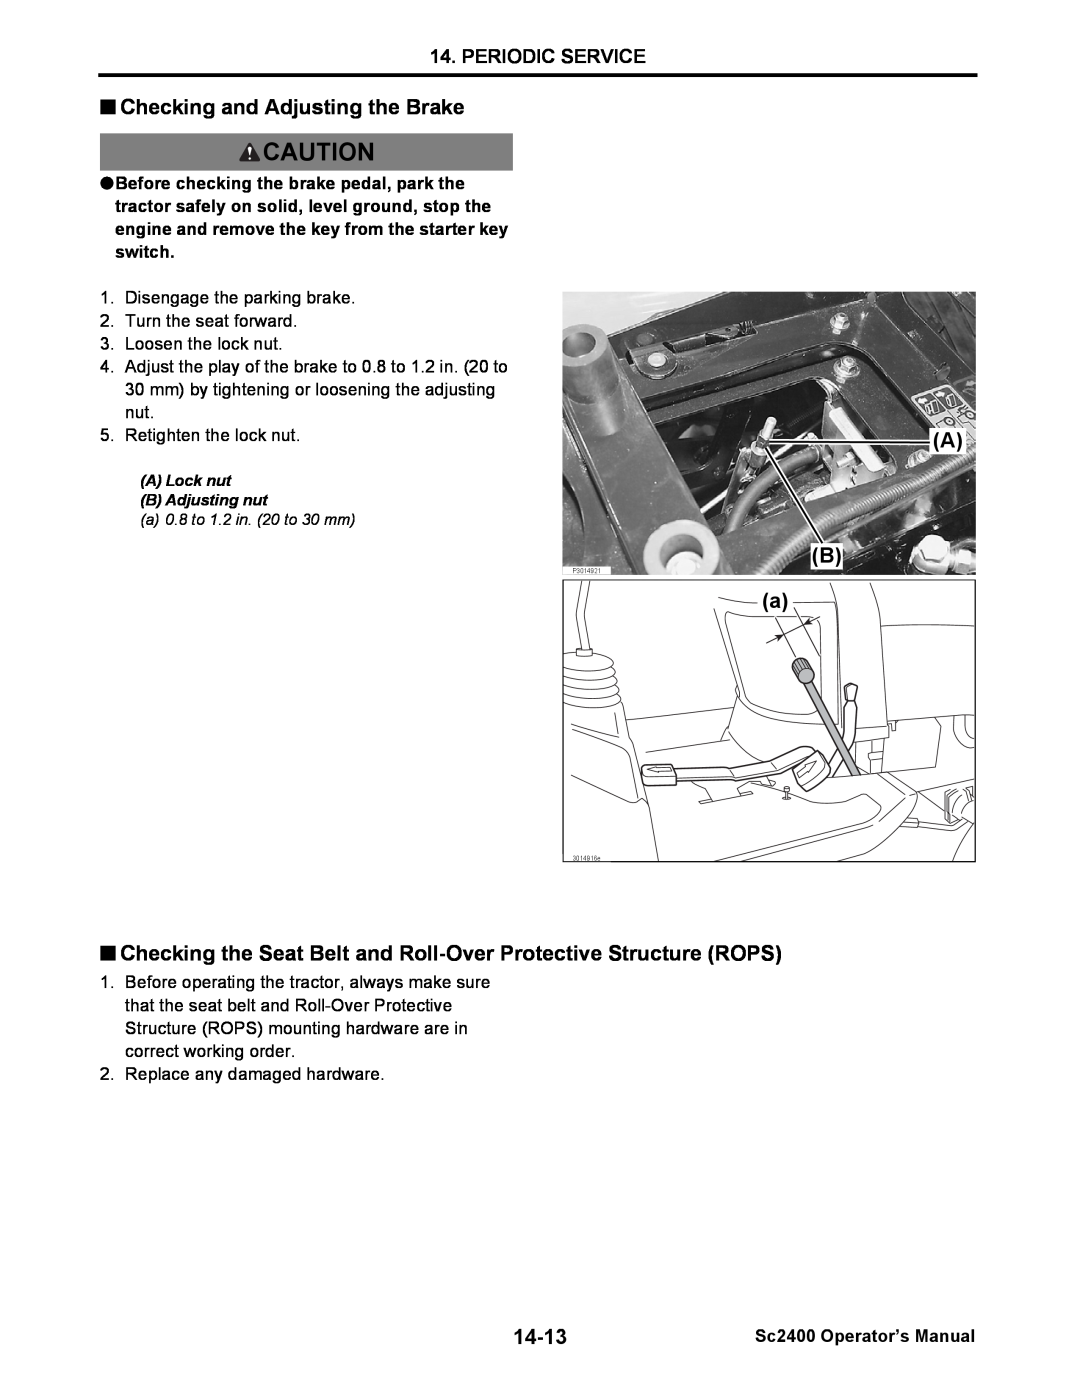 Cub Cadet SC2400 manual Checking and Adjusting the Brake, Periodic Service, 14-13, Sc2400 Operator’s Manual 